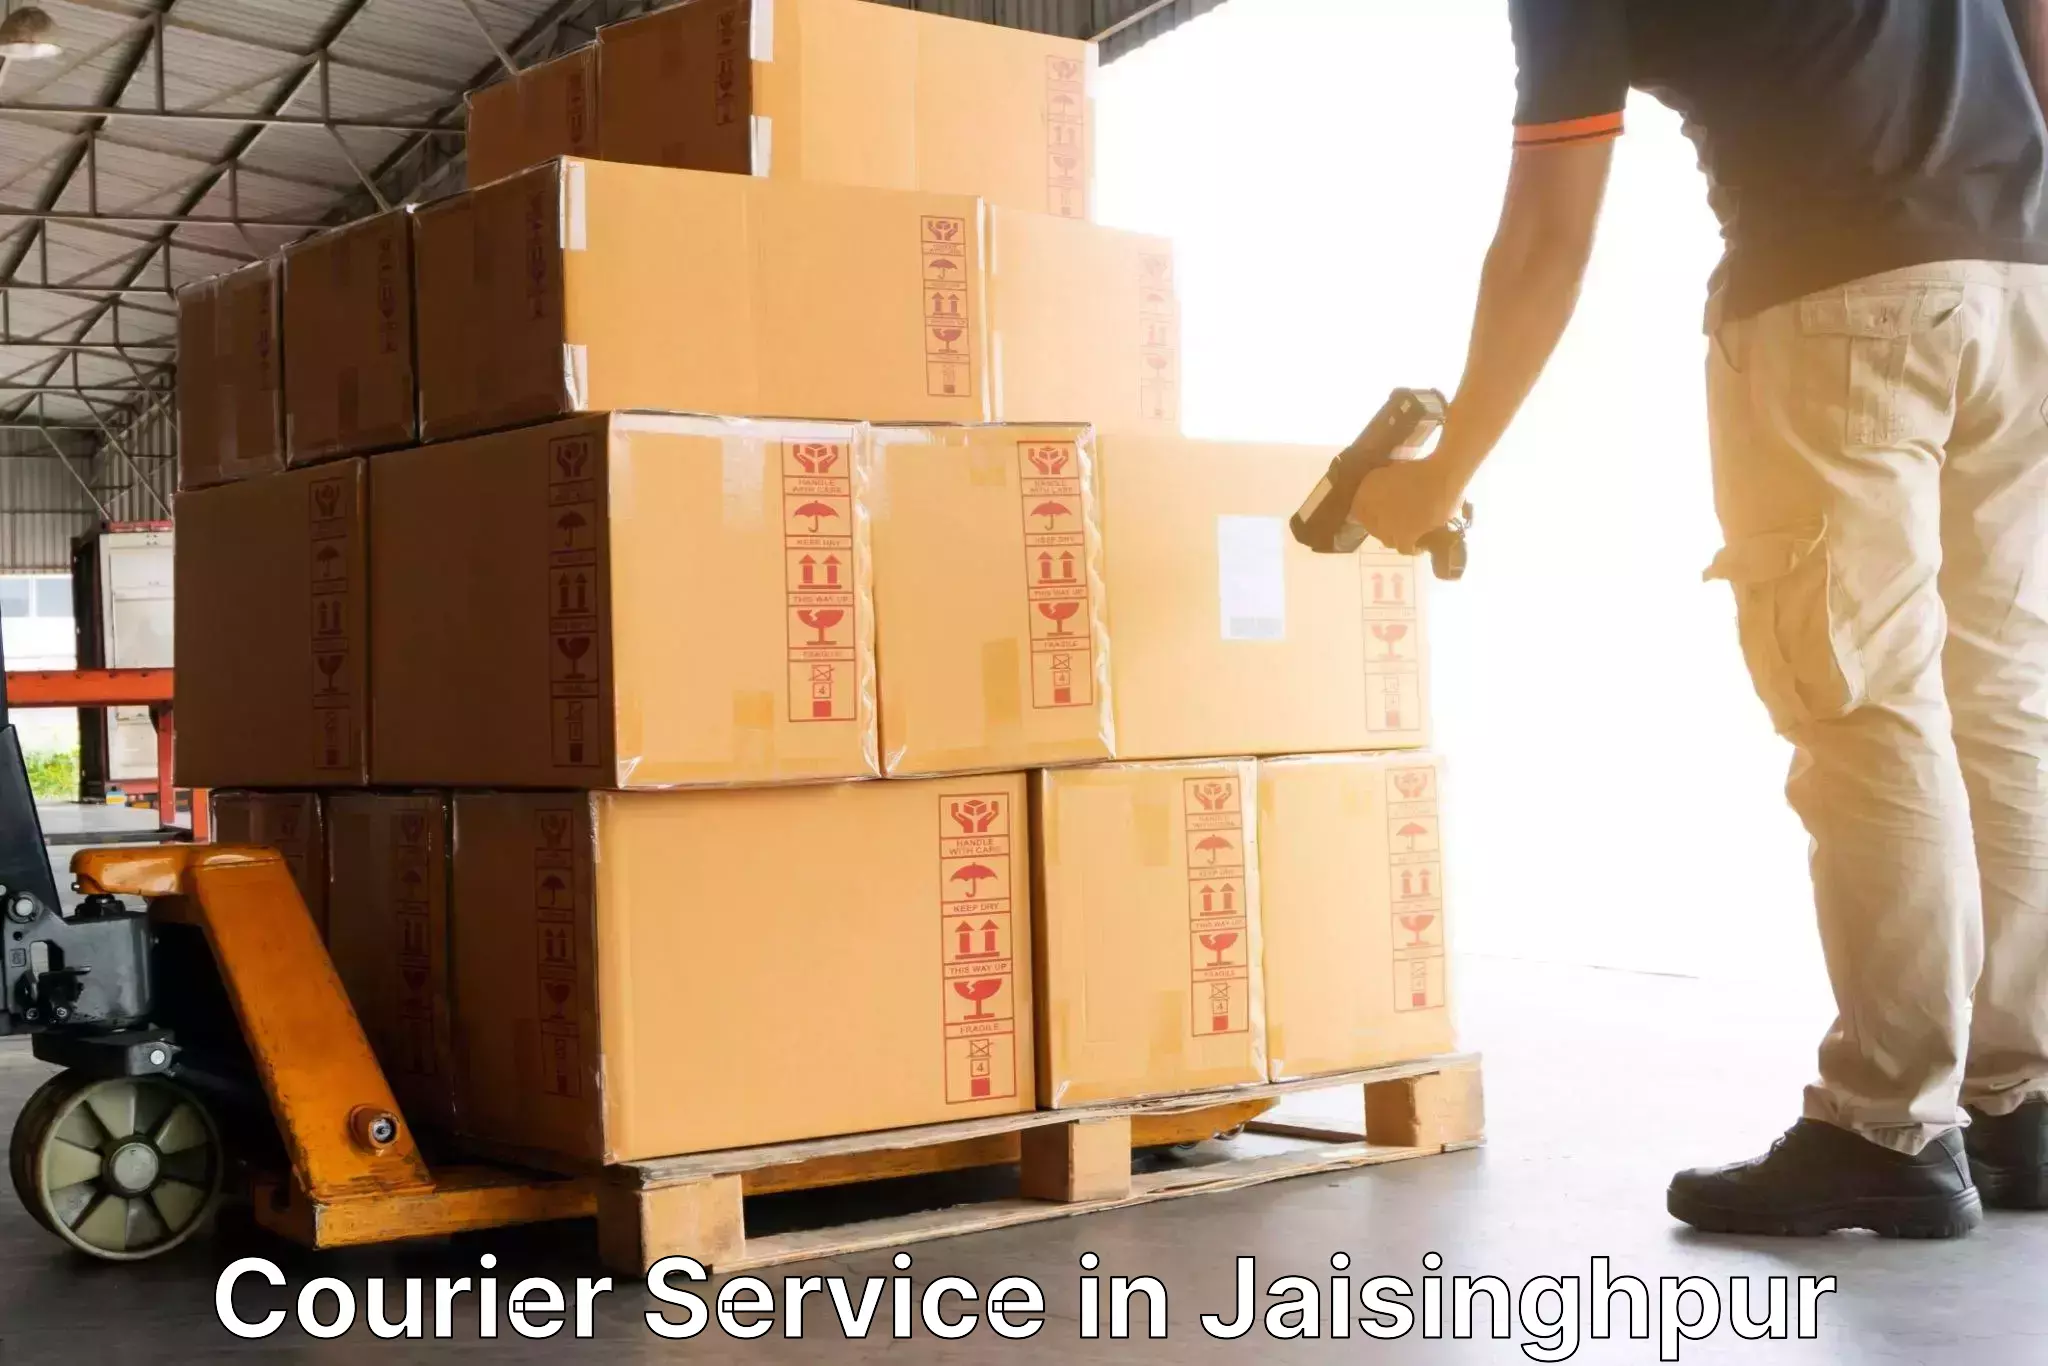 Fast-track shipping solutions in Jaisinghpur